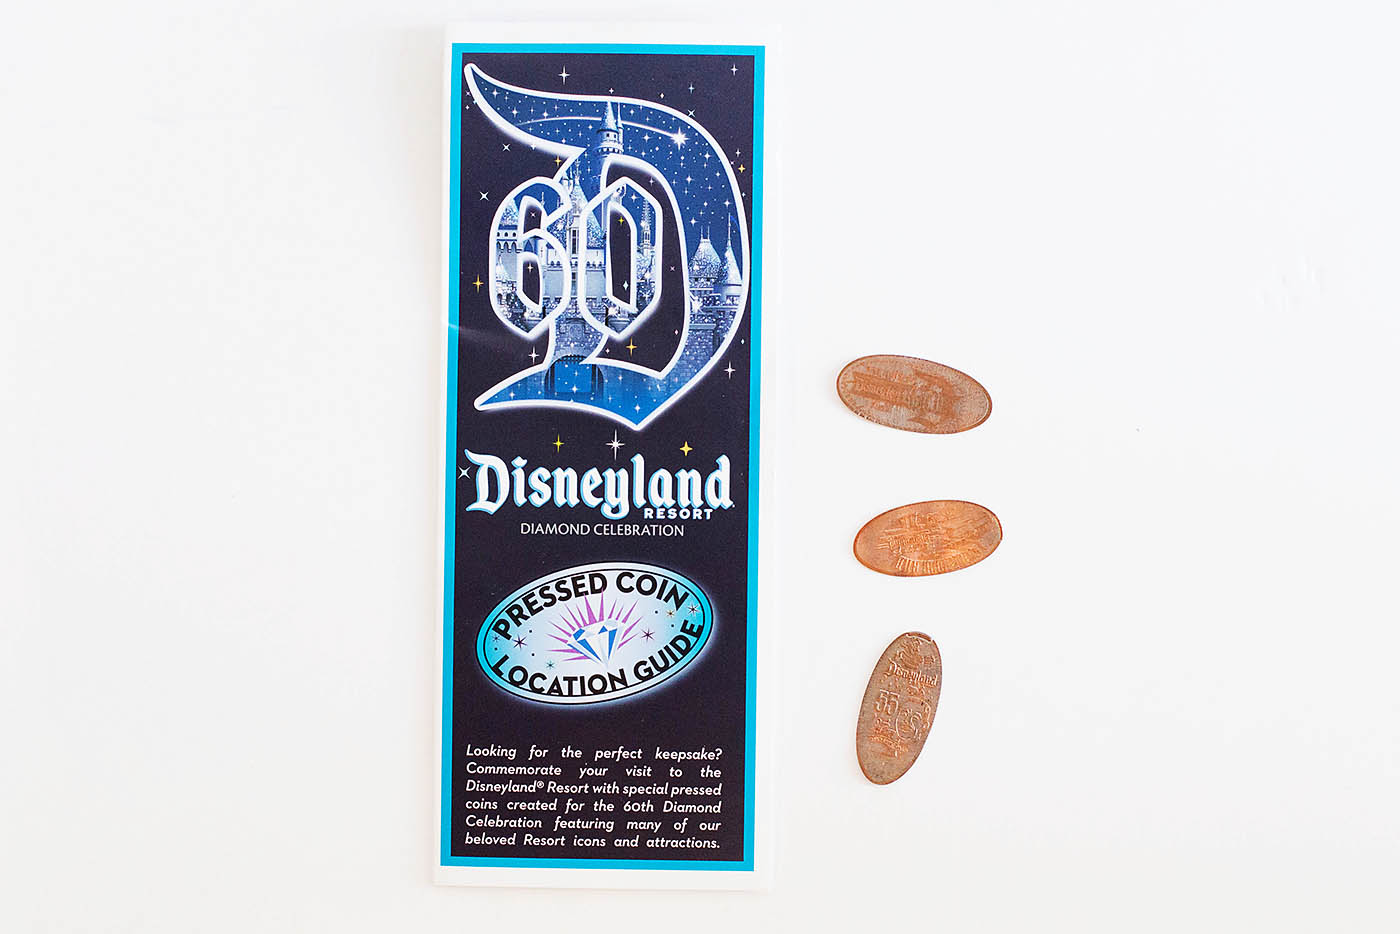 Disneyland Diamond Celebration Pressed Coins